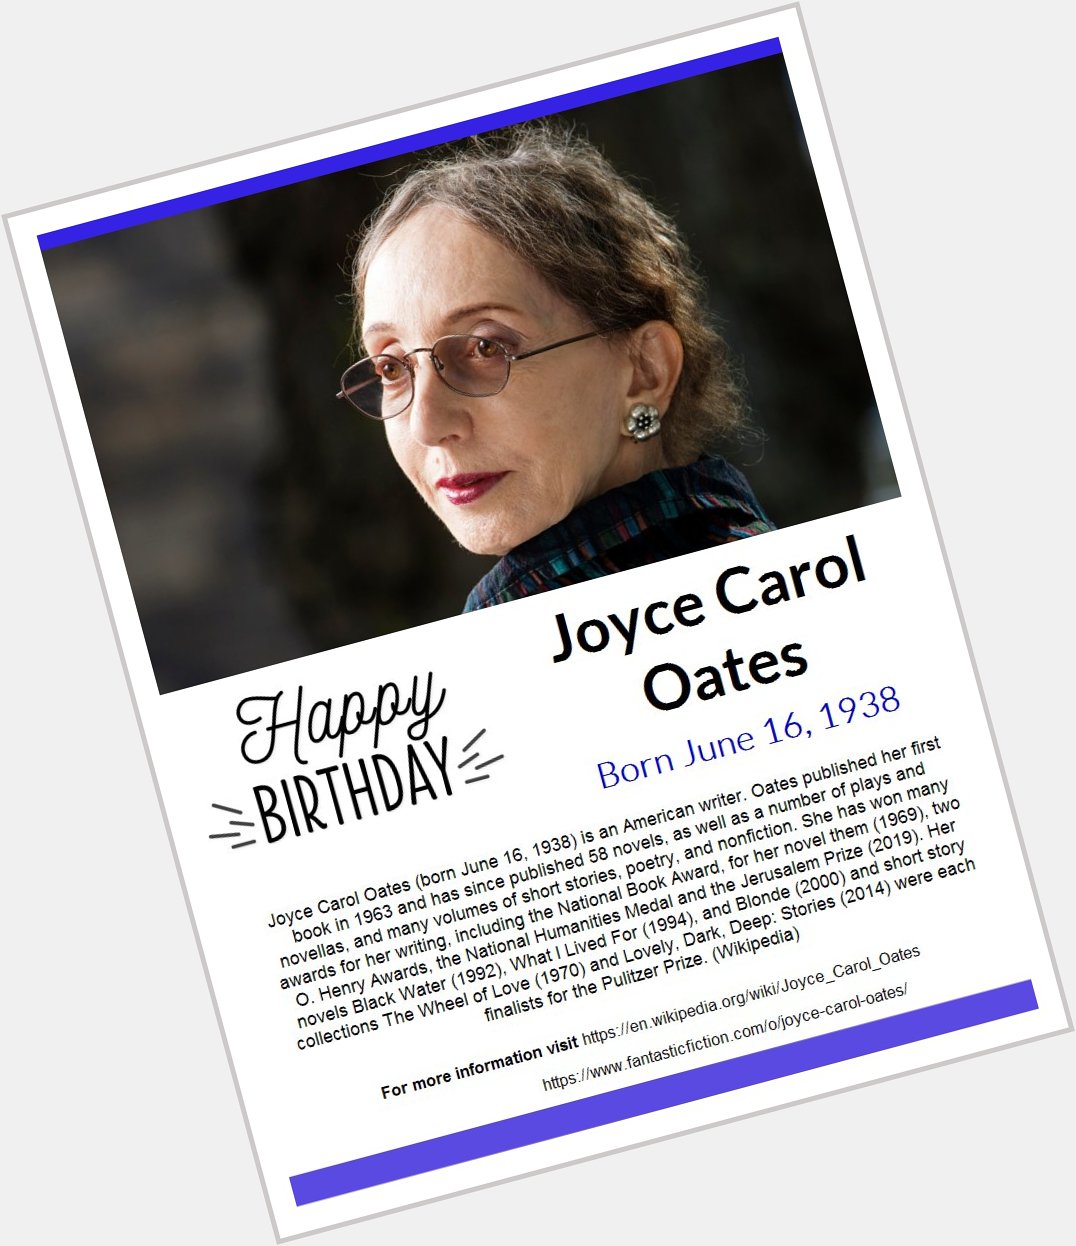 Happy Birthday Joyce Carol Oates!  